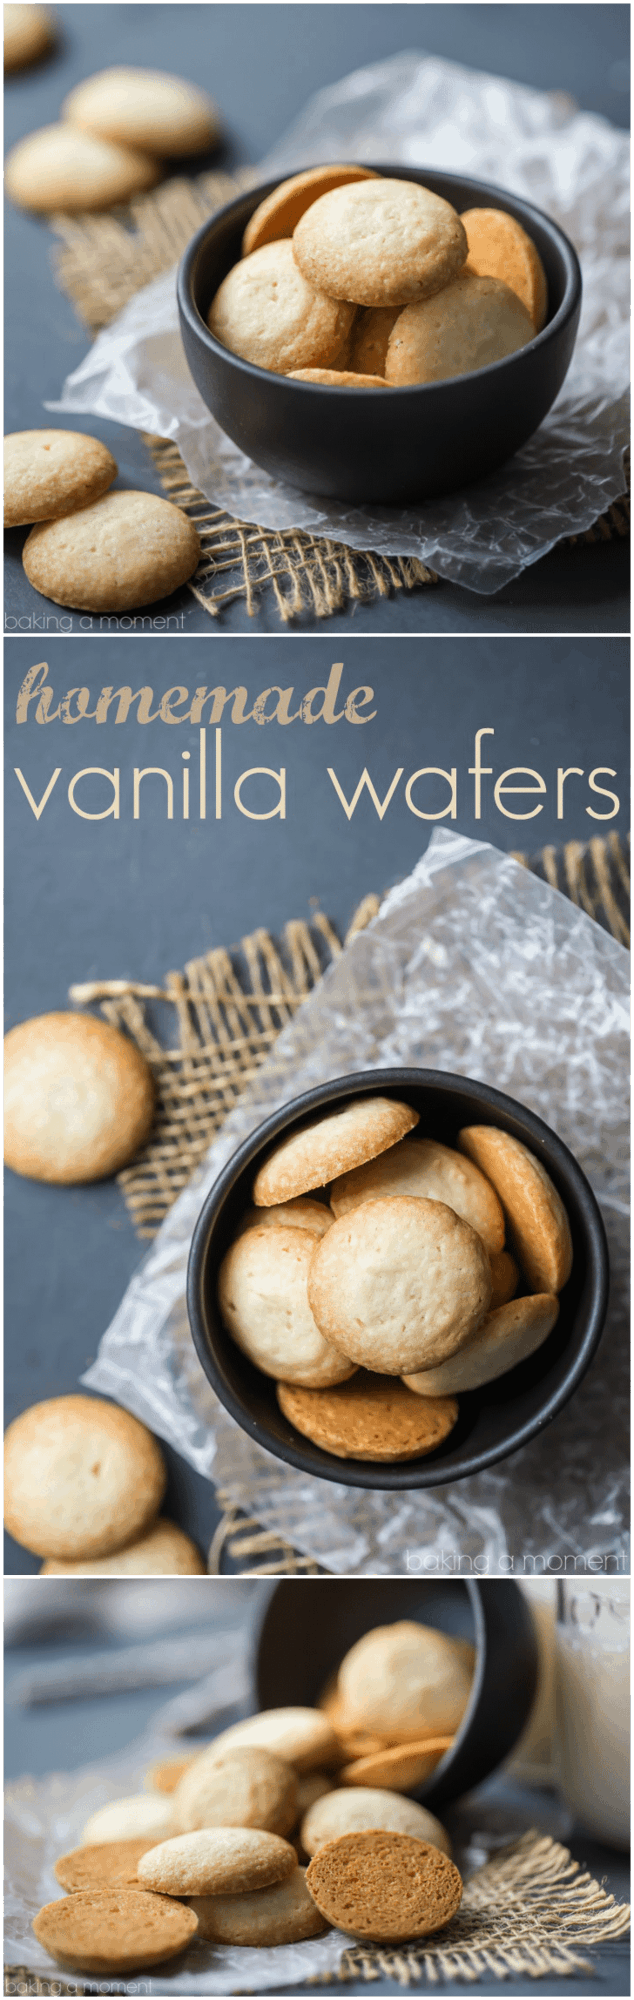 Homemade Vanilla Wafers - Baking A Moment